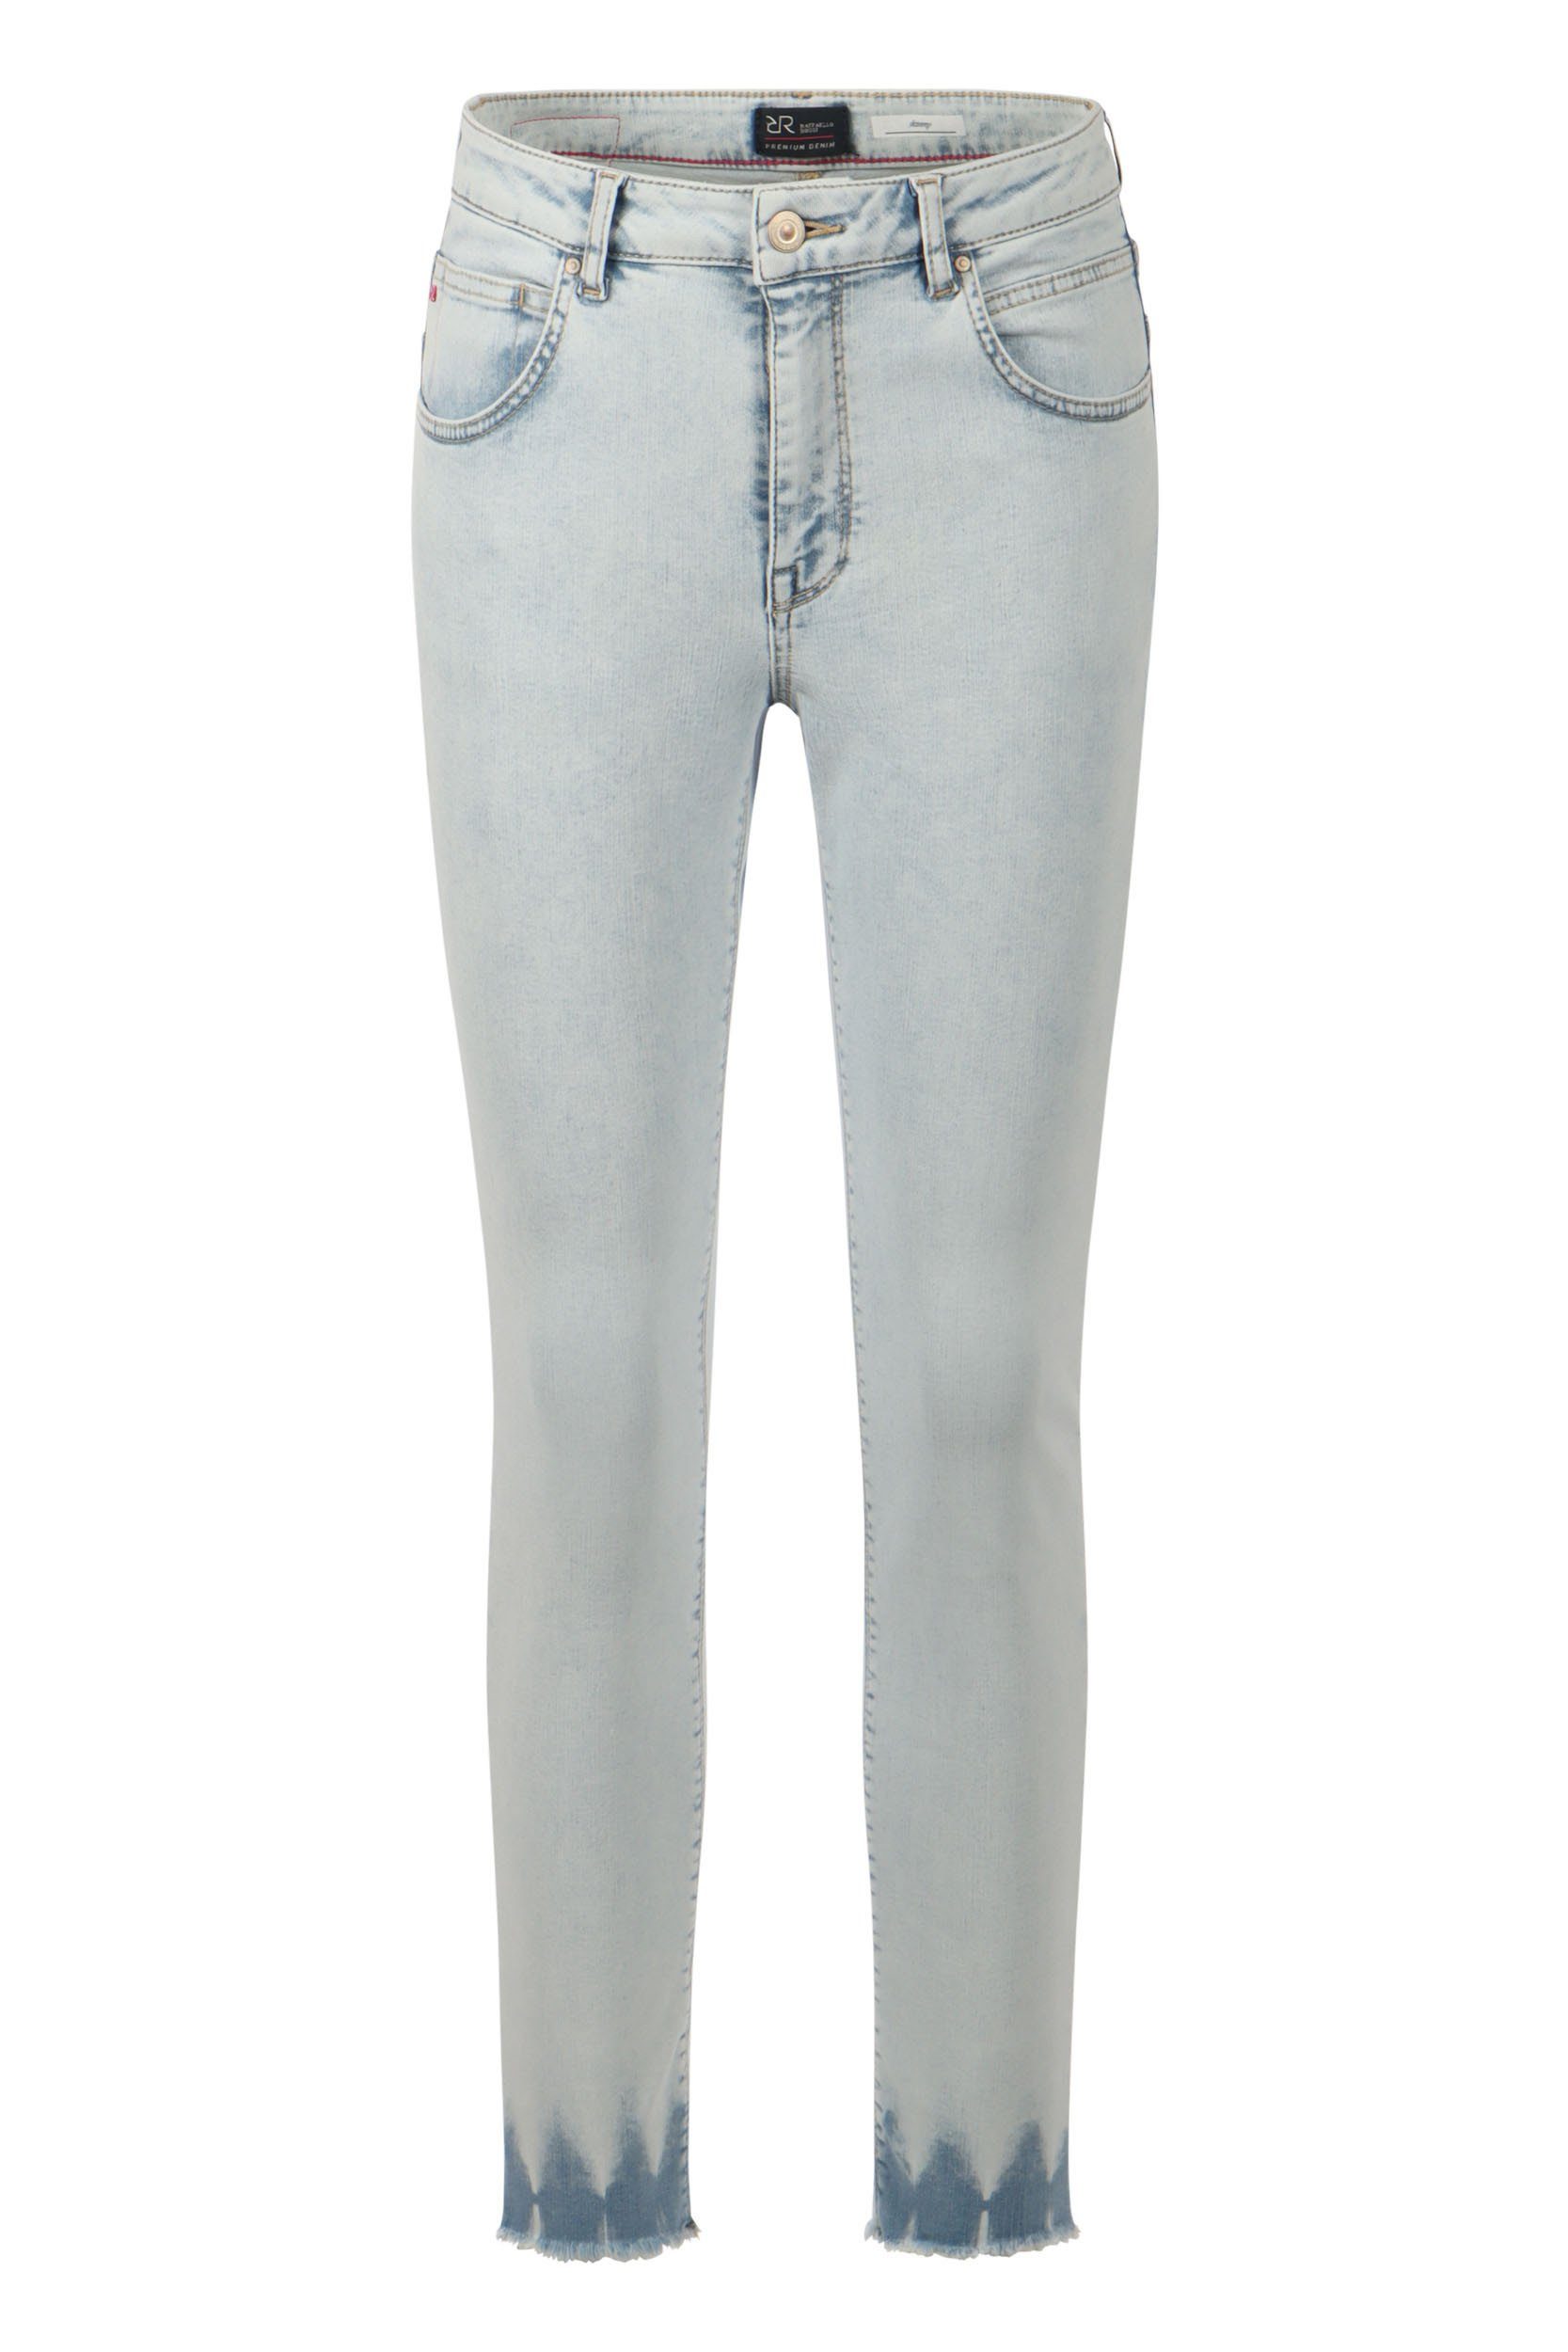 Raffaello Rossi 5-Pocket-Jeans Amal 7/8 Highstretch Denim | Slim-Fit Jeans